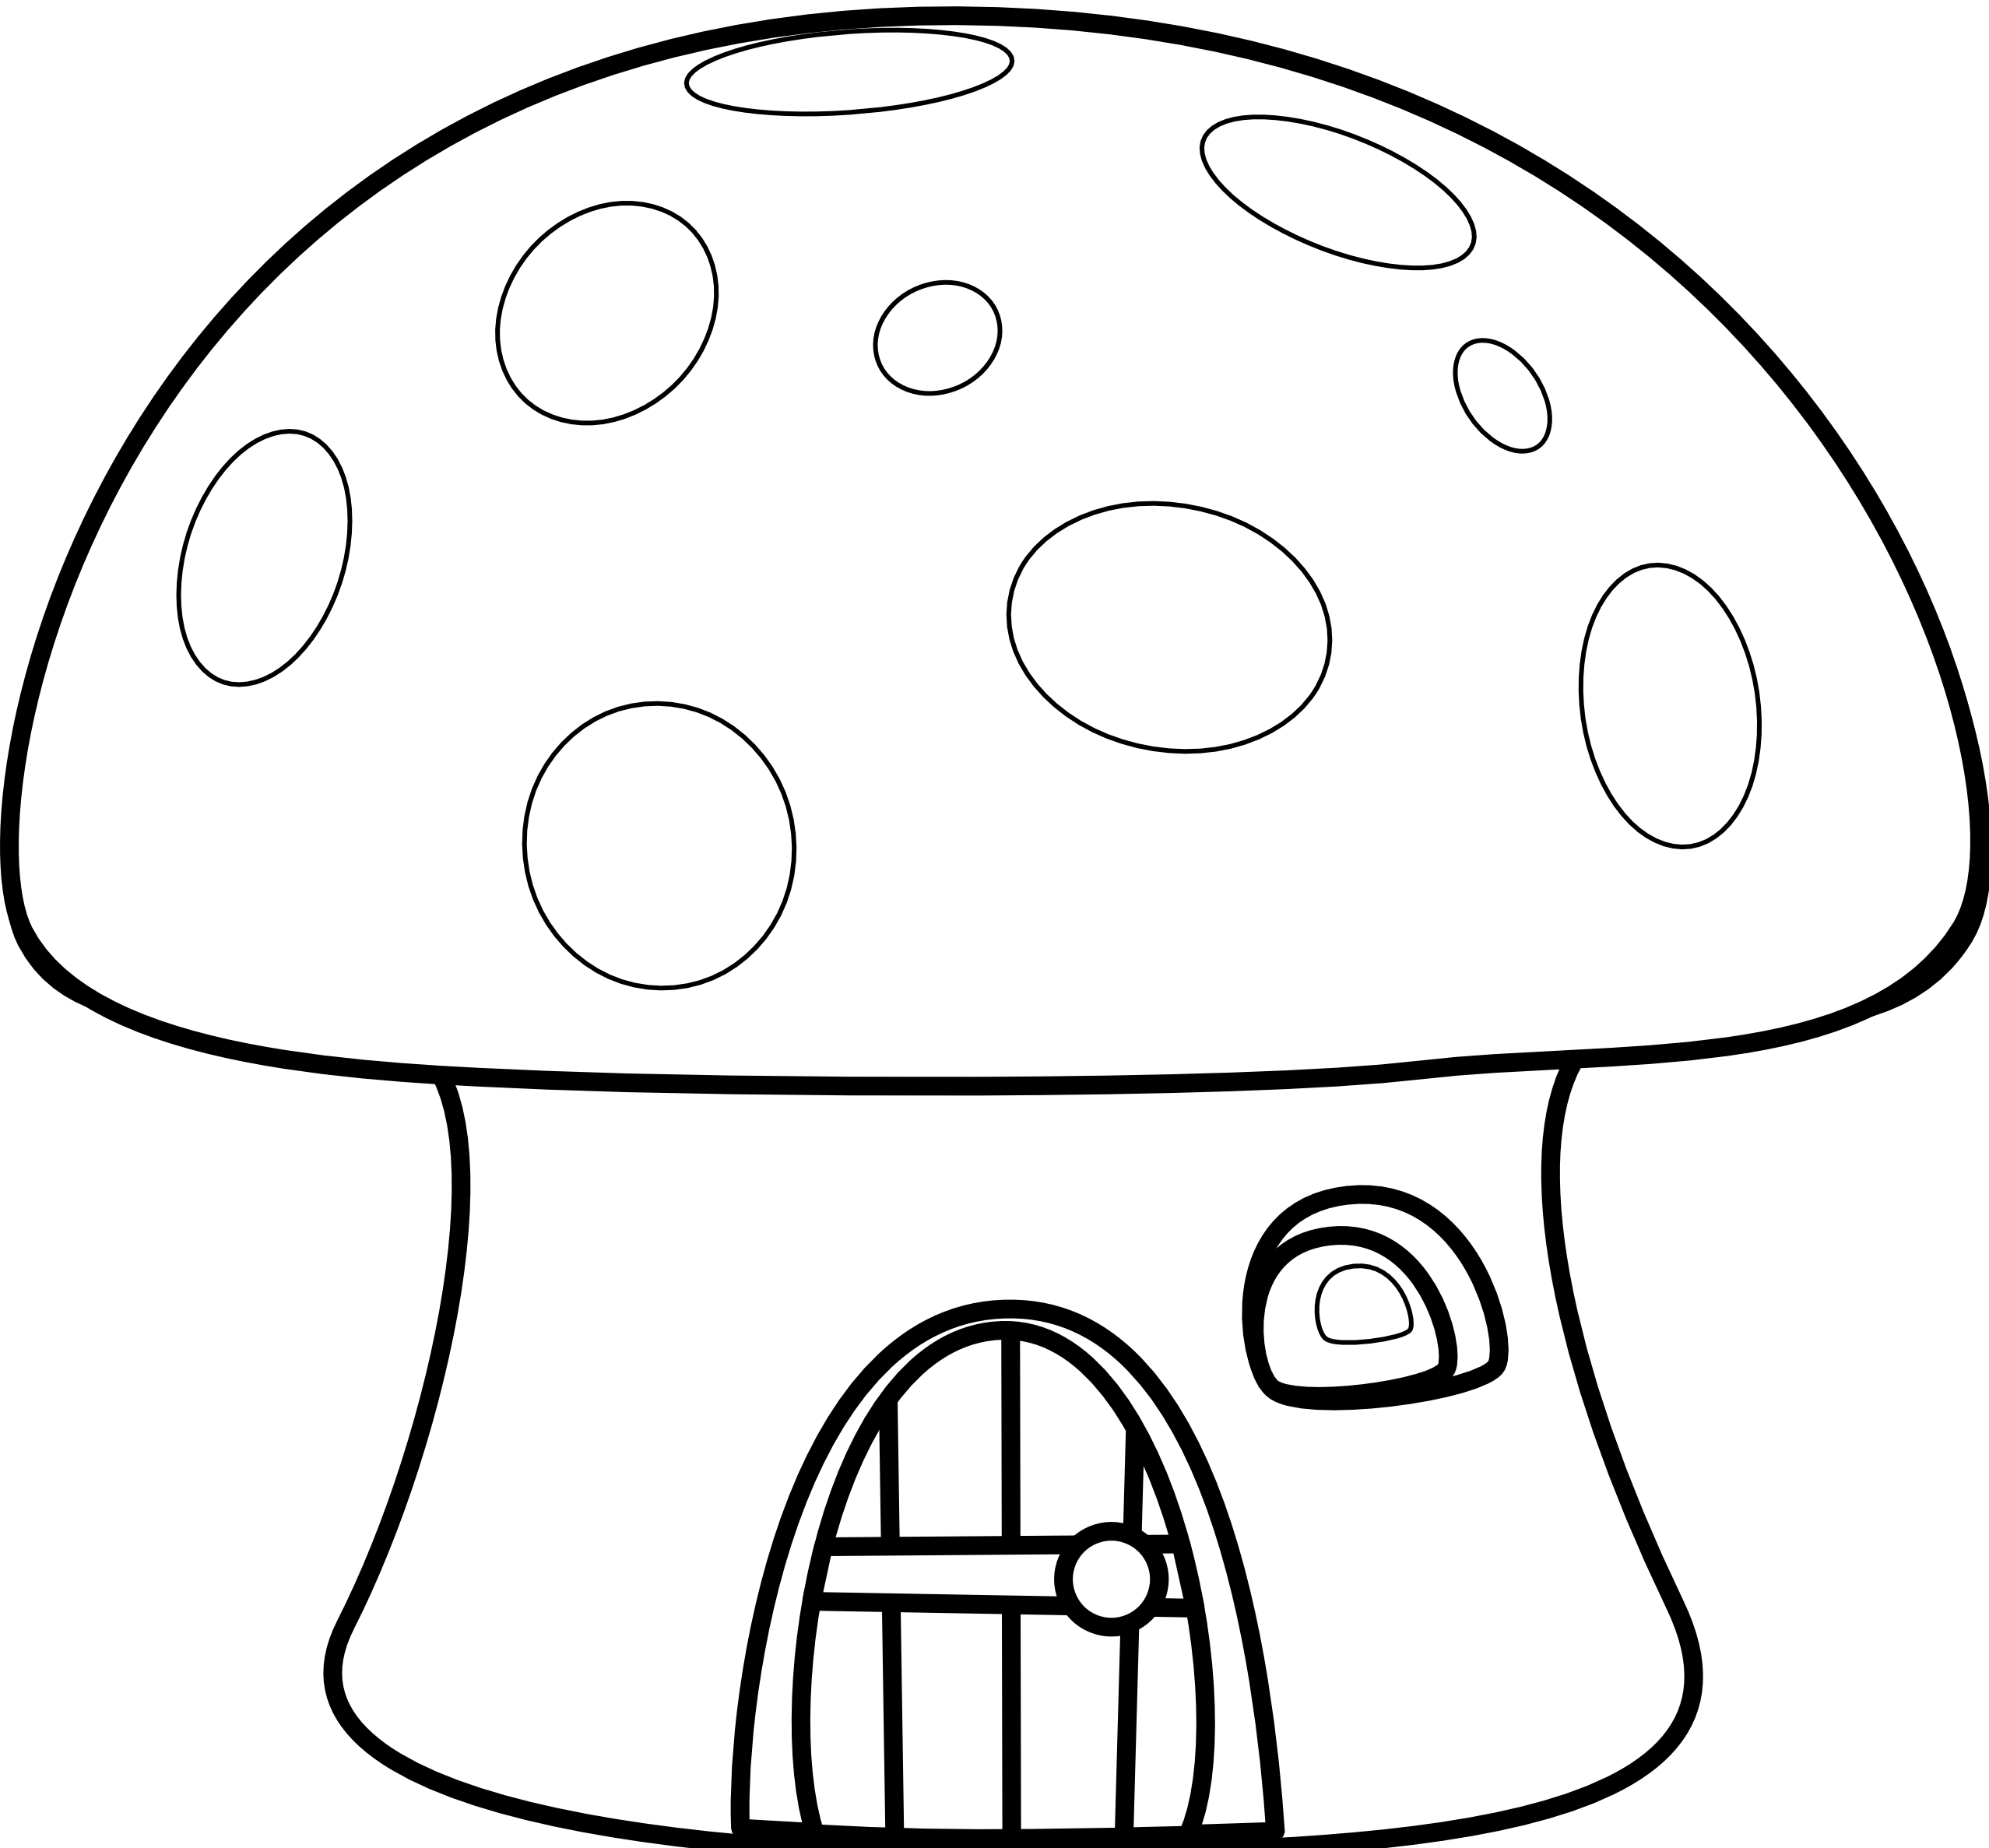 Mushroom house clipart black and white 